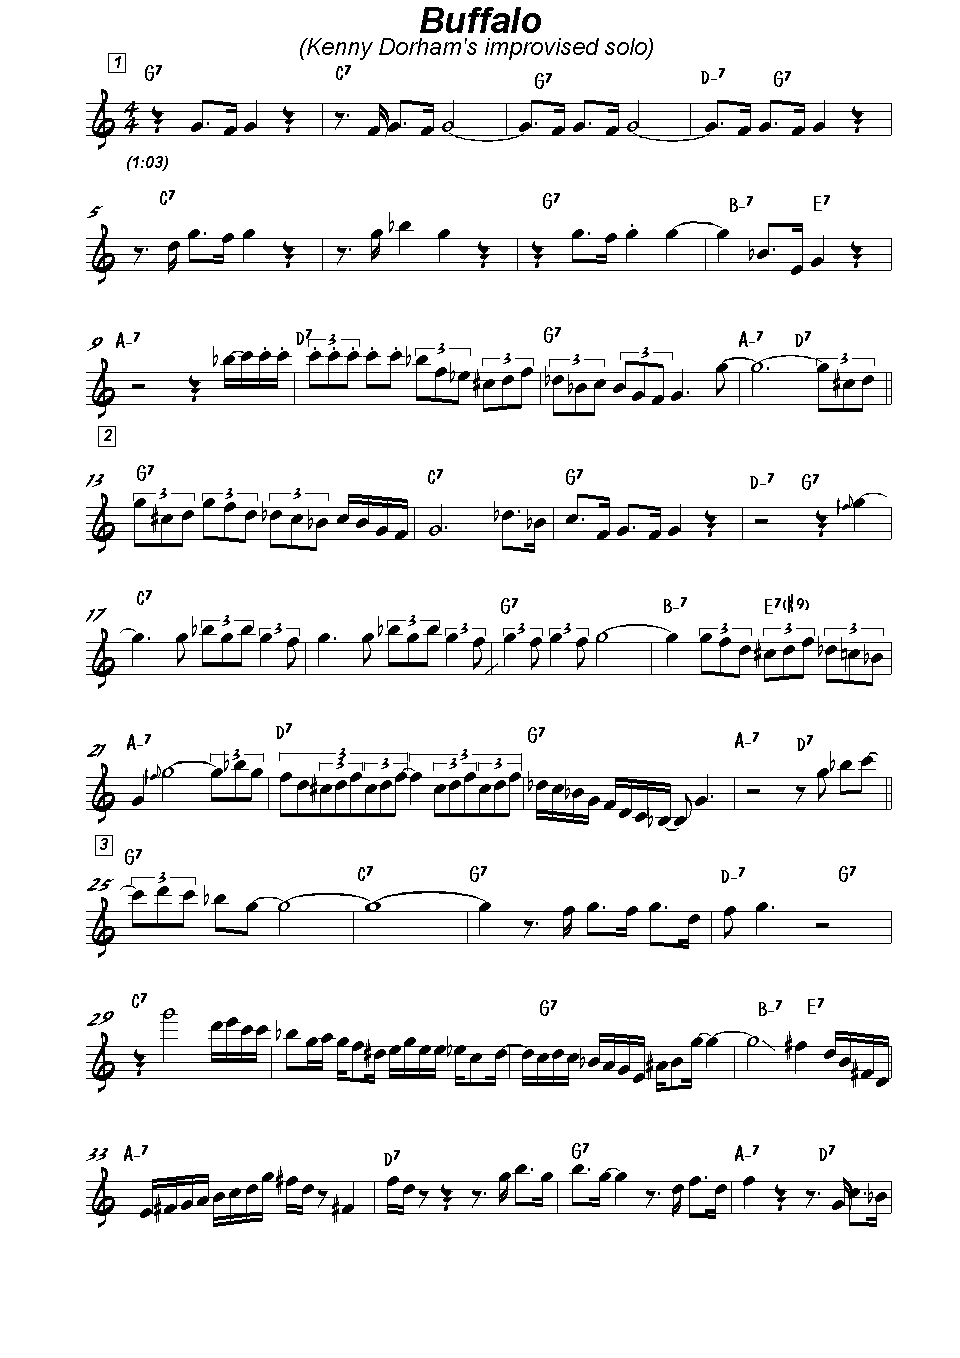 a sample of Kenny Dorham's solo on Buffalo